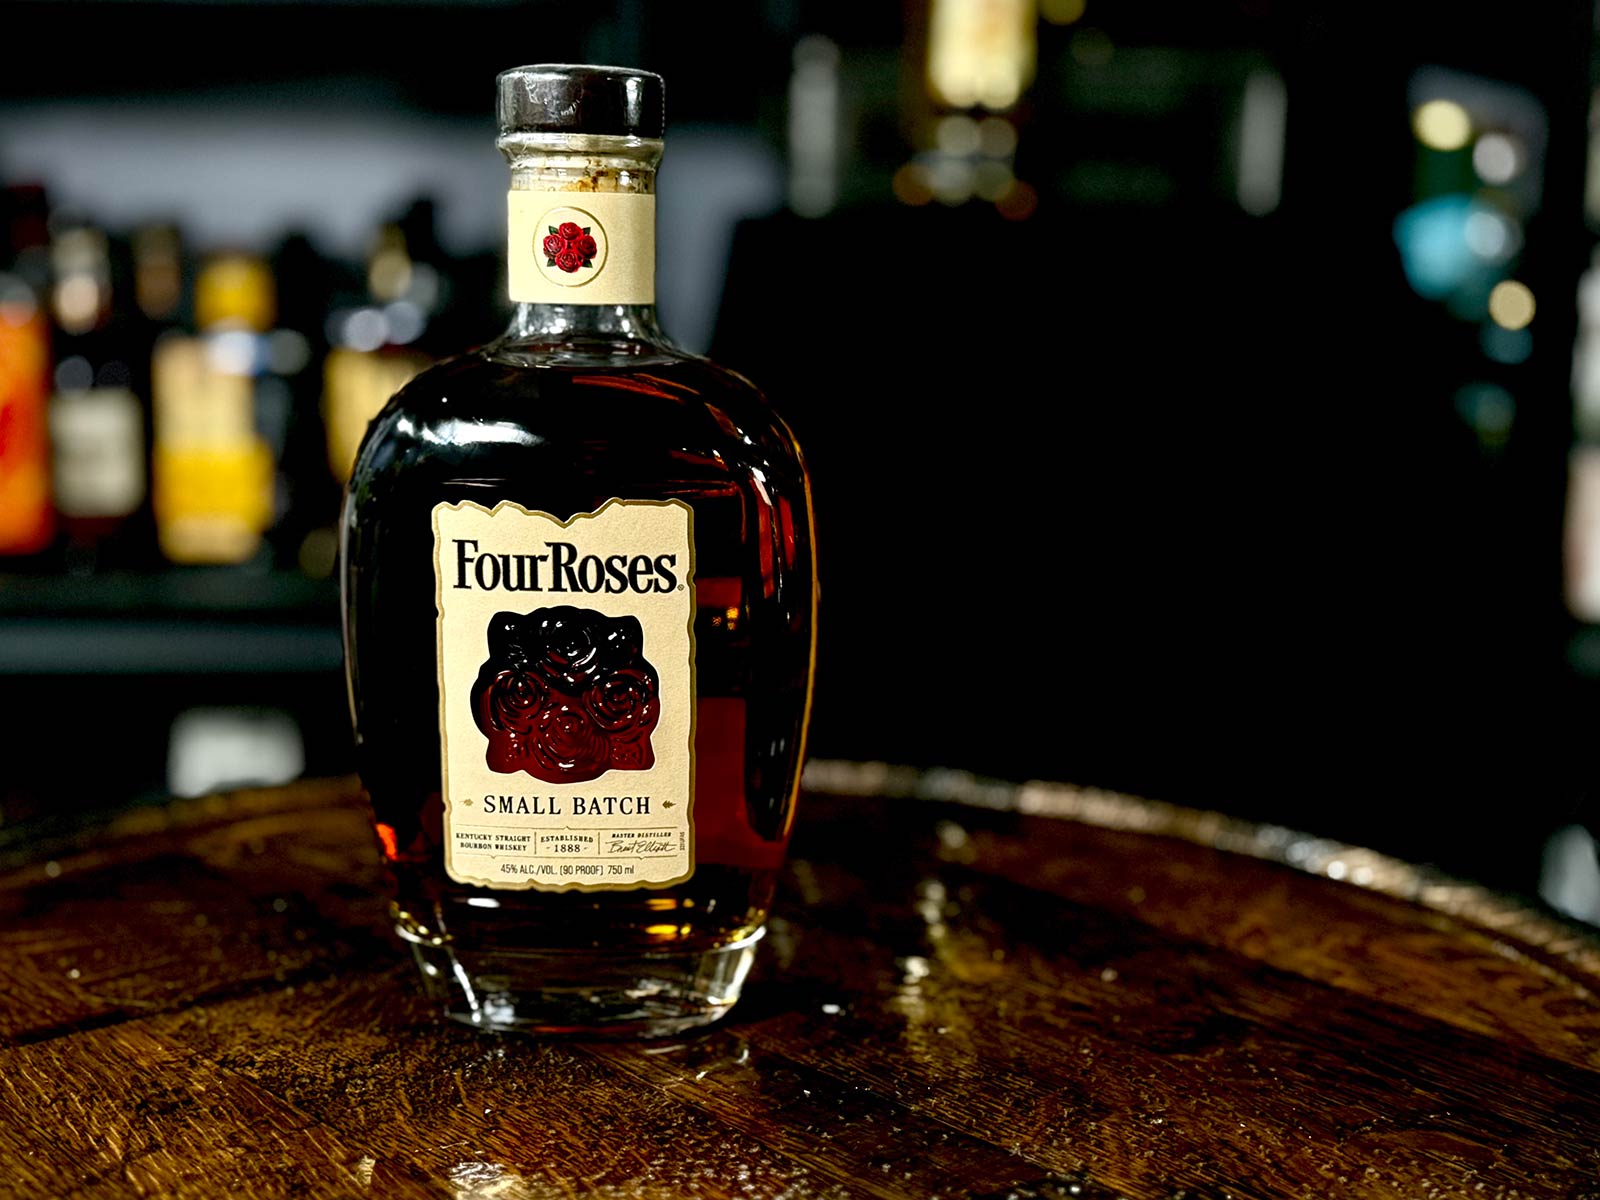 Four Roses Small Batch Kentucky Straight Bourbon Whiskey